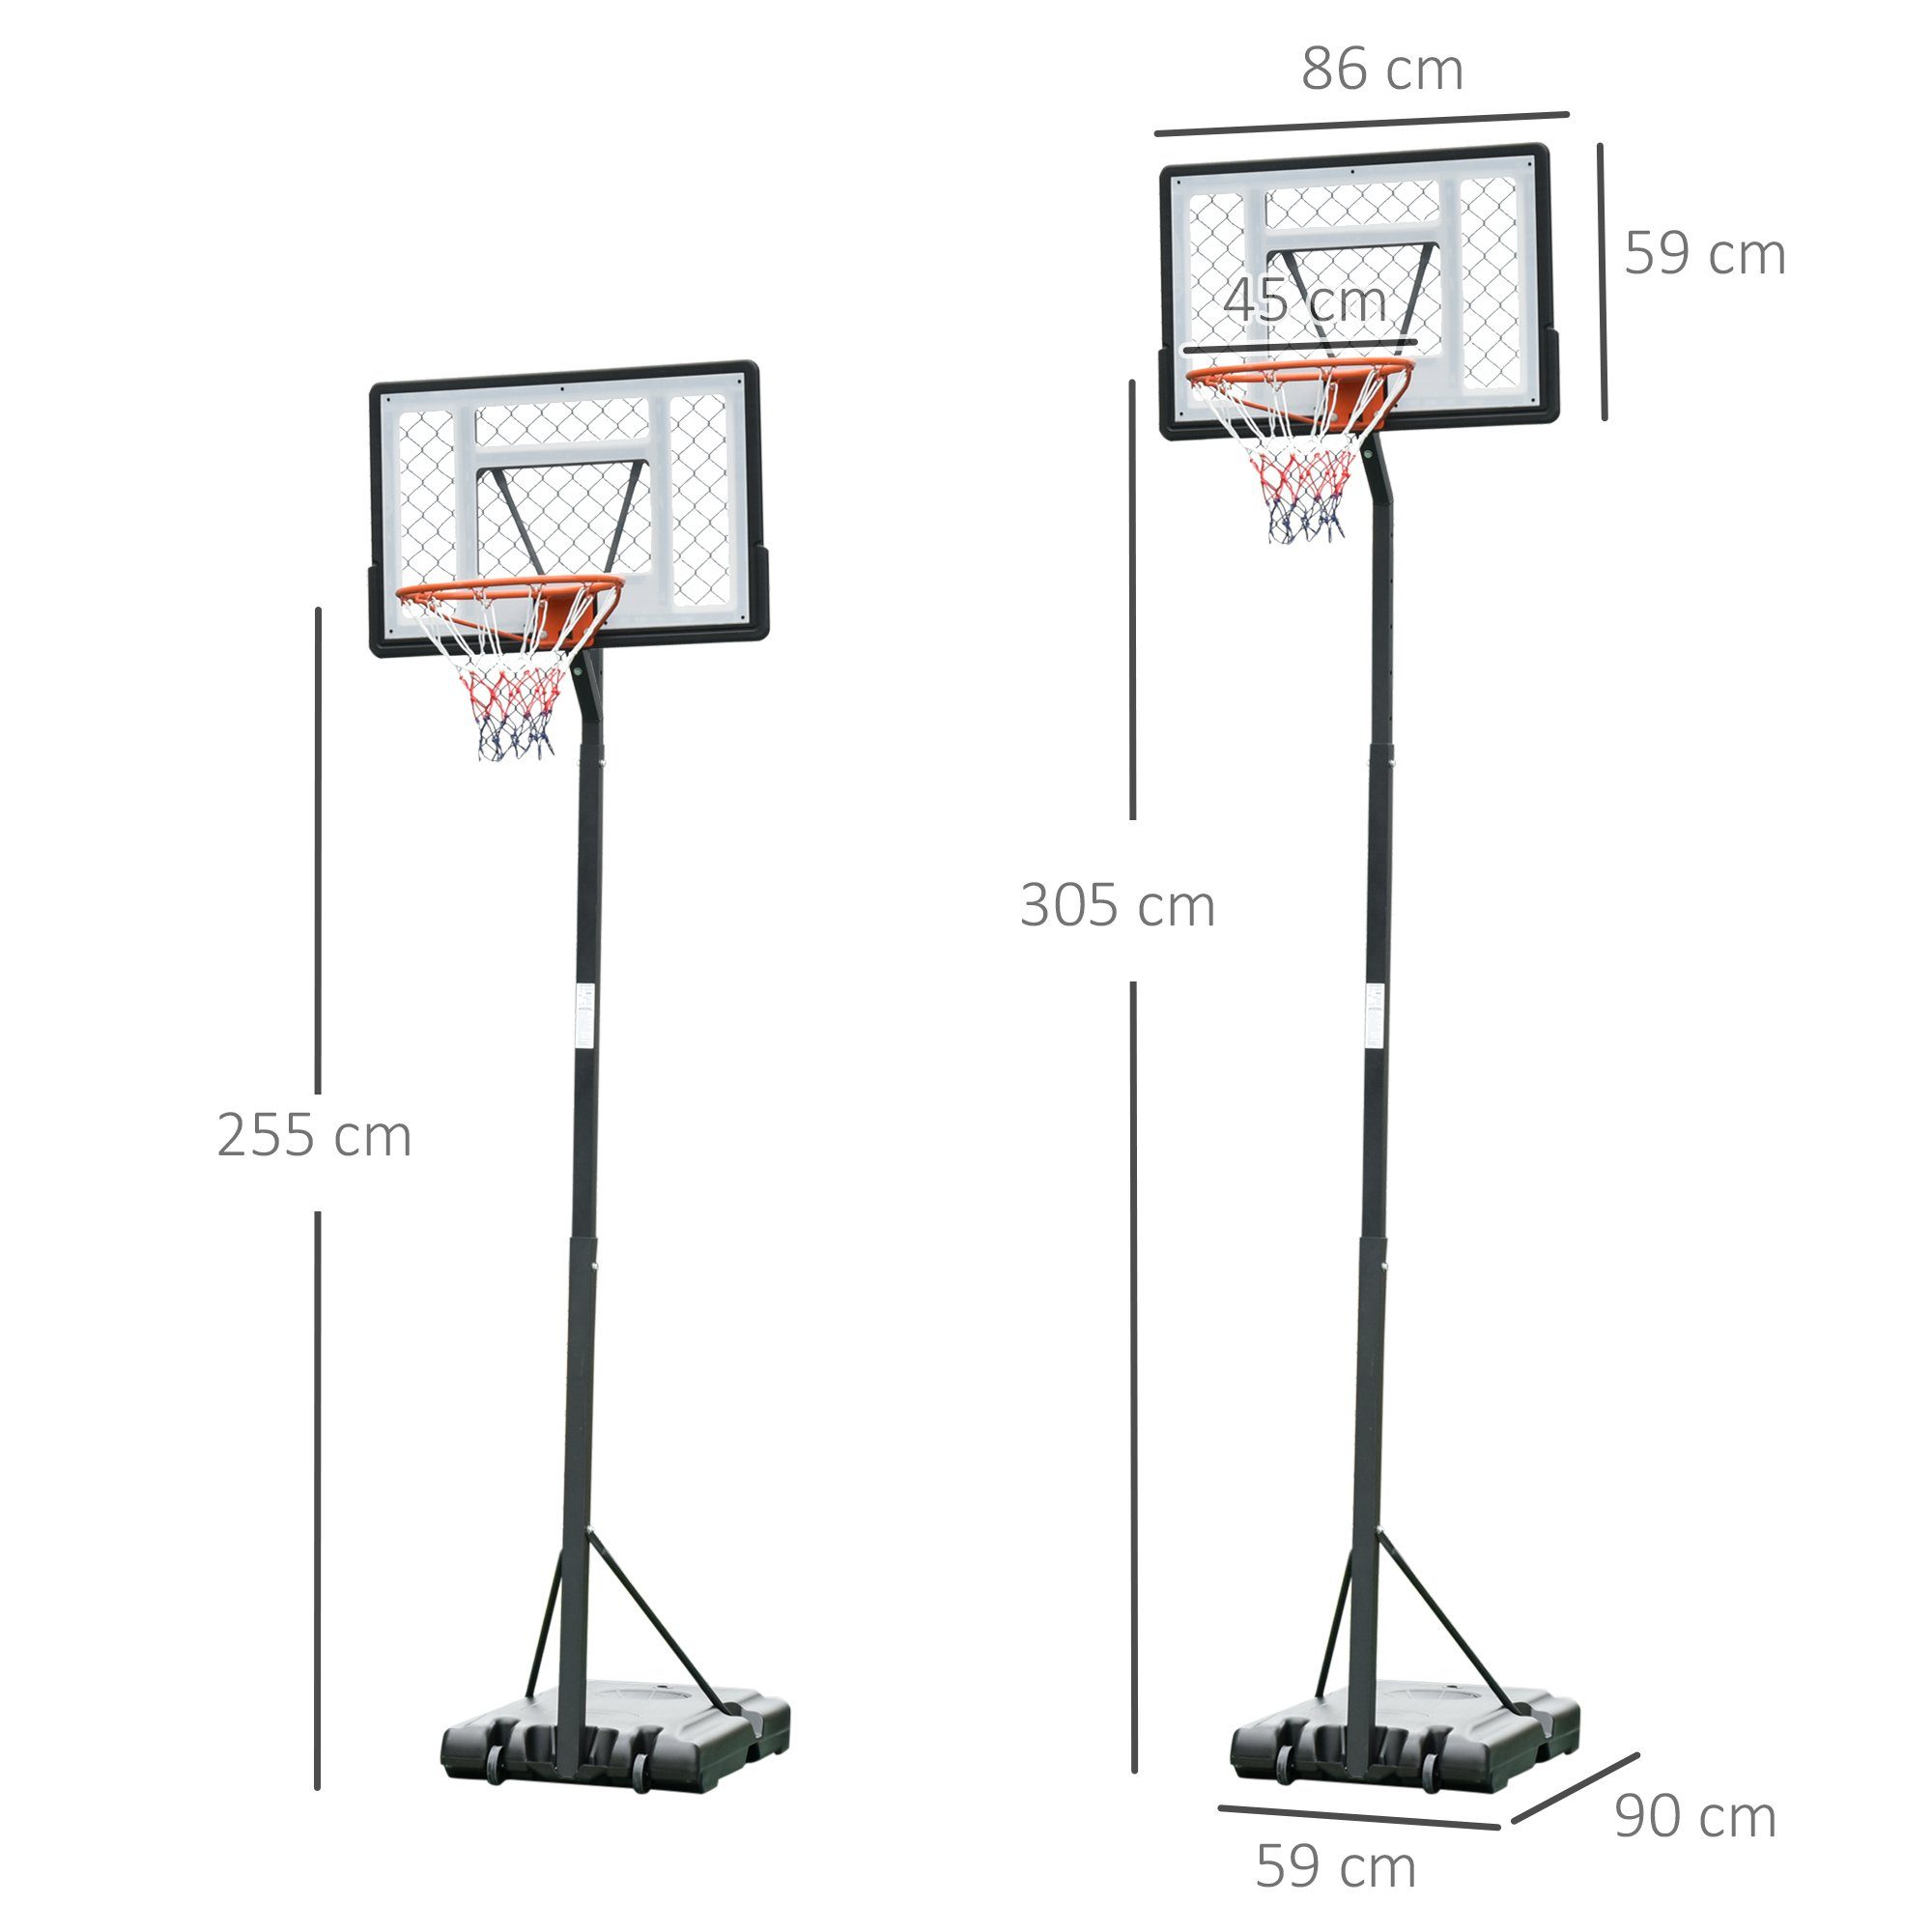 HOMCOM Basketballständer Basketballkorb Rädern 2 mit